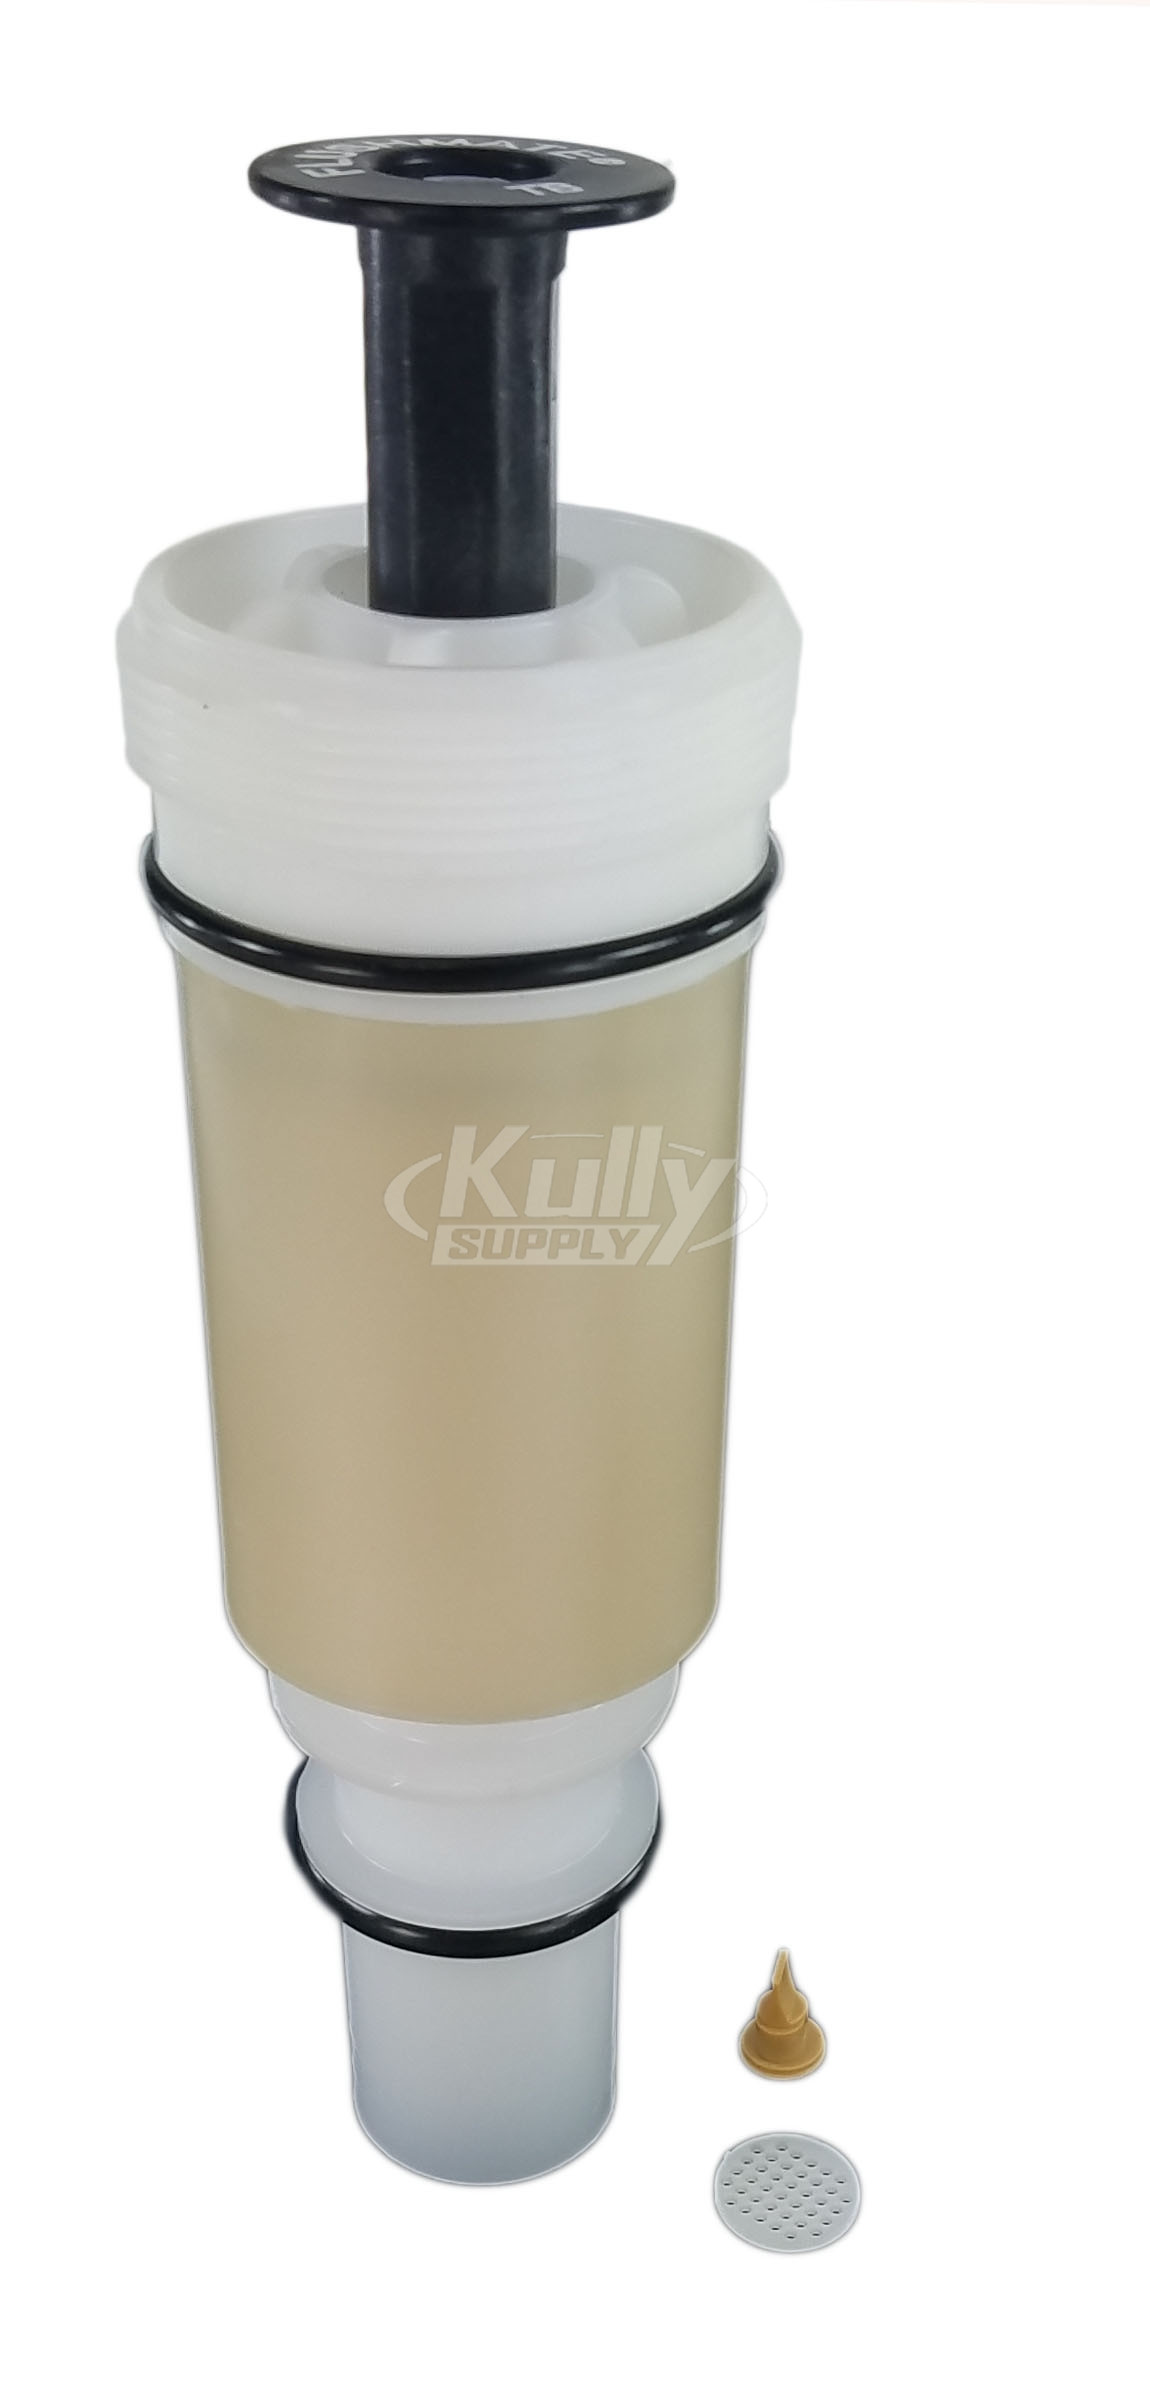 Sloan Flushmate C-100501-K Replacement Cartridge Kit